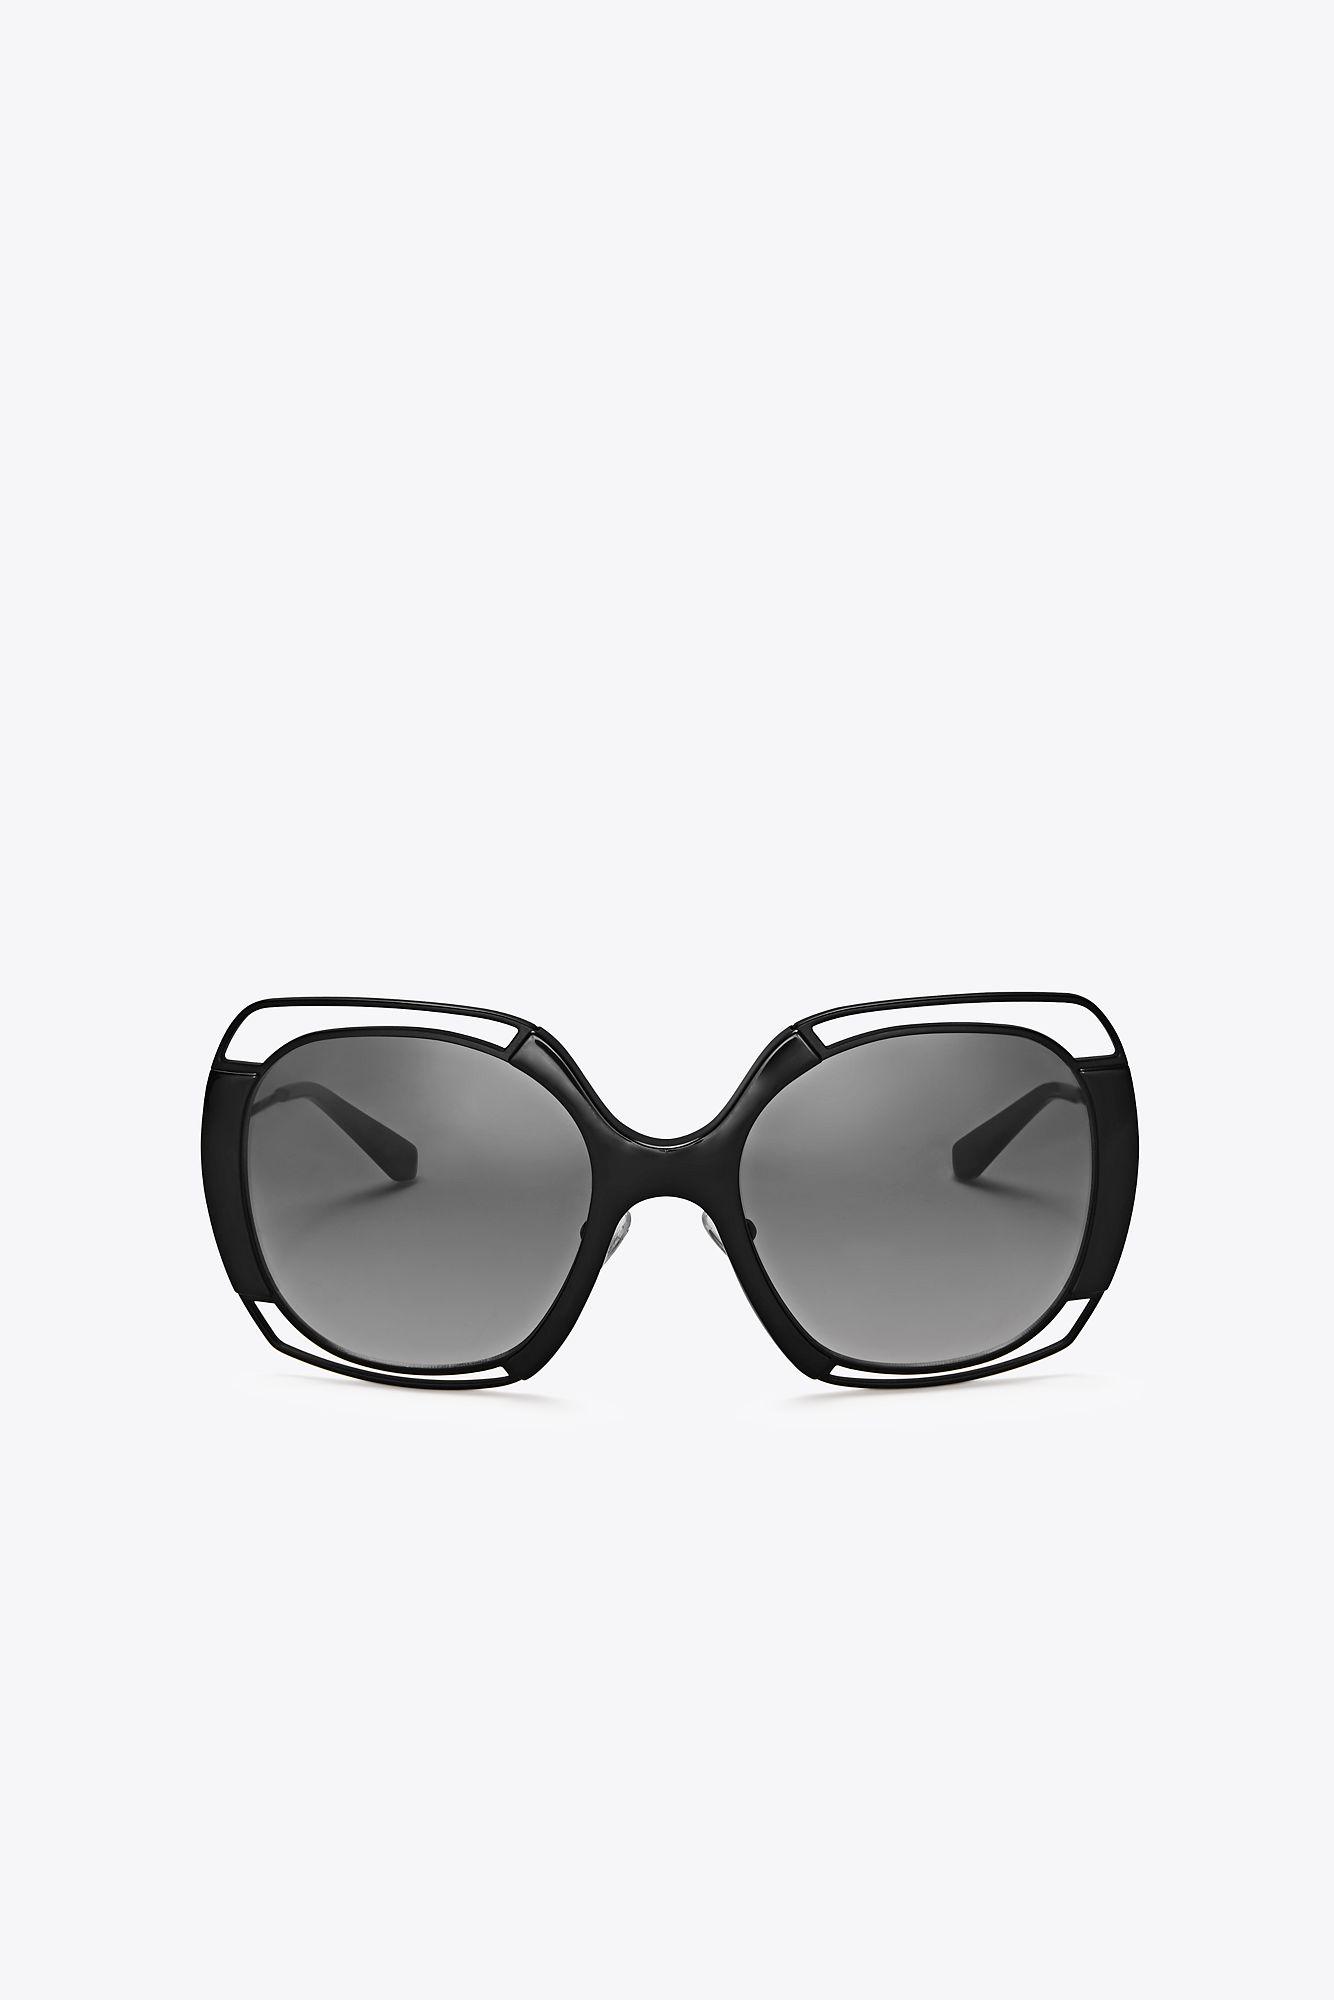 Tory Burch Open-wire Sunglasses in 